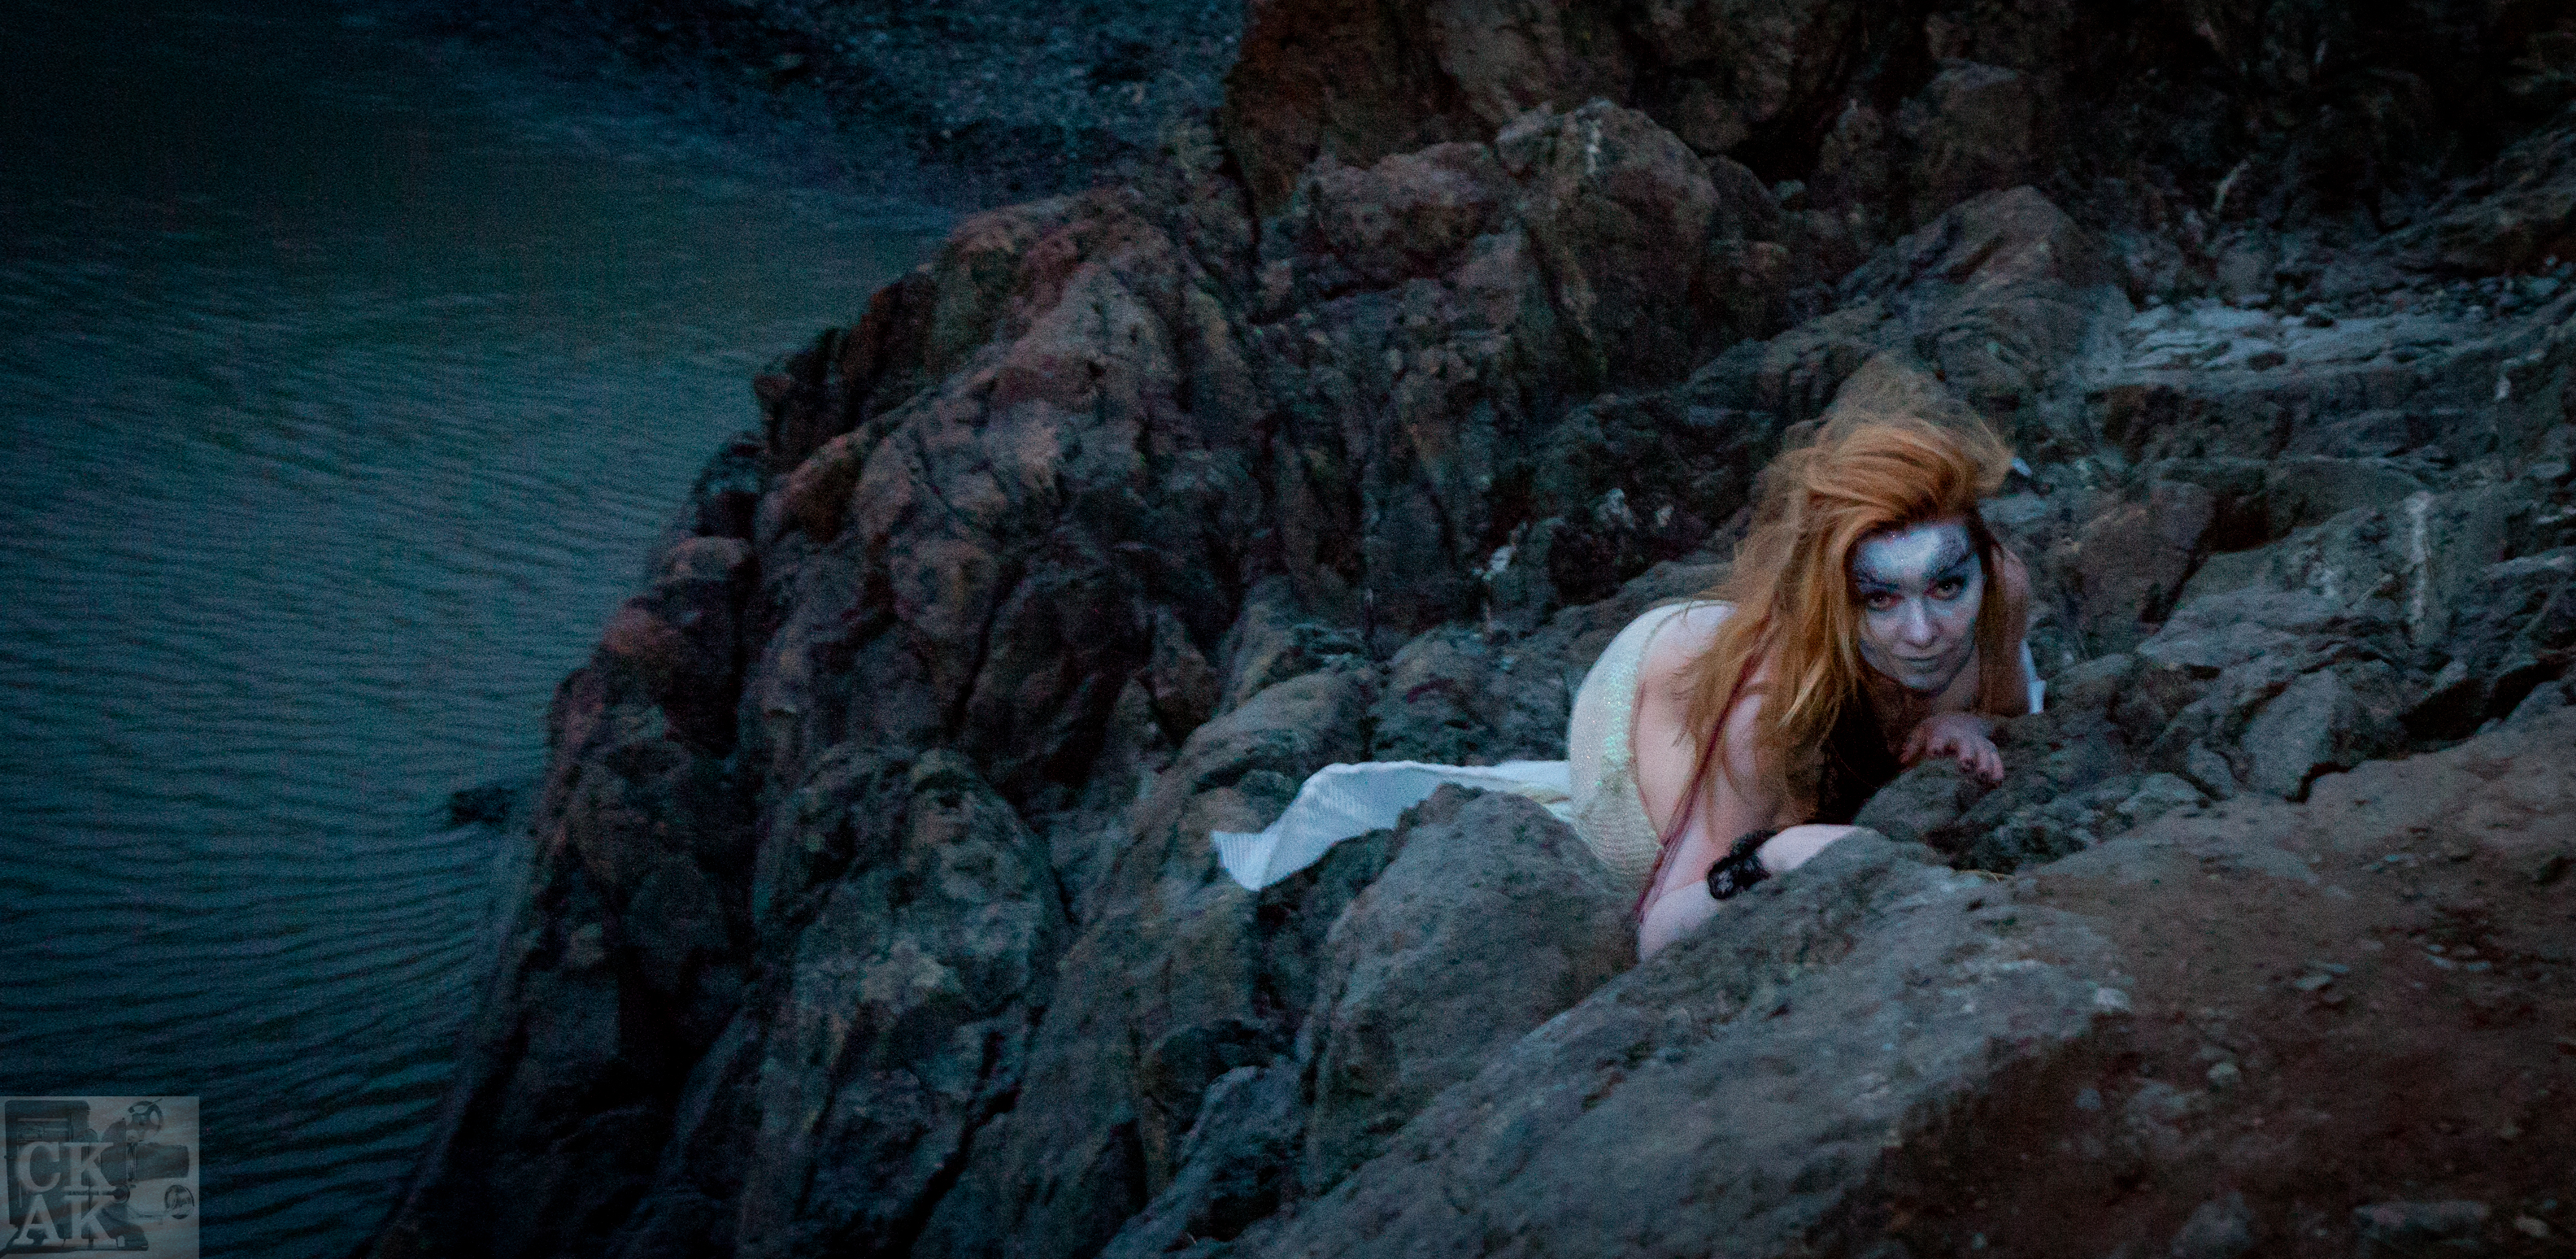 Midnight Mermaid at Beluga Point